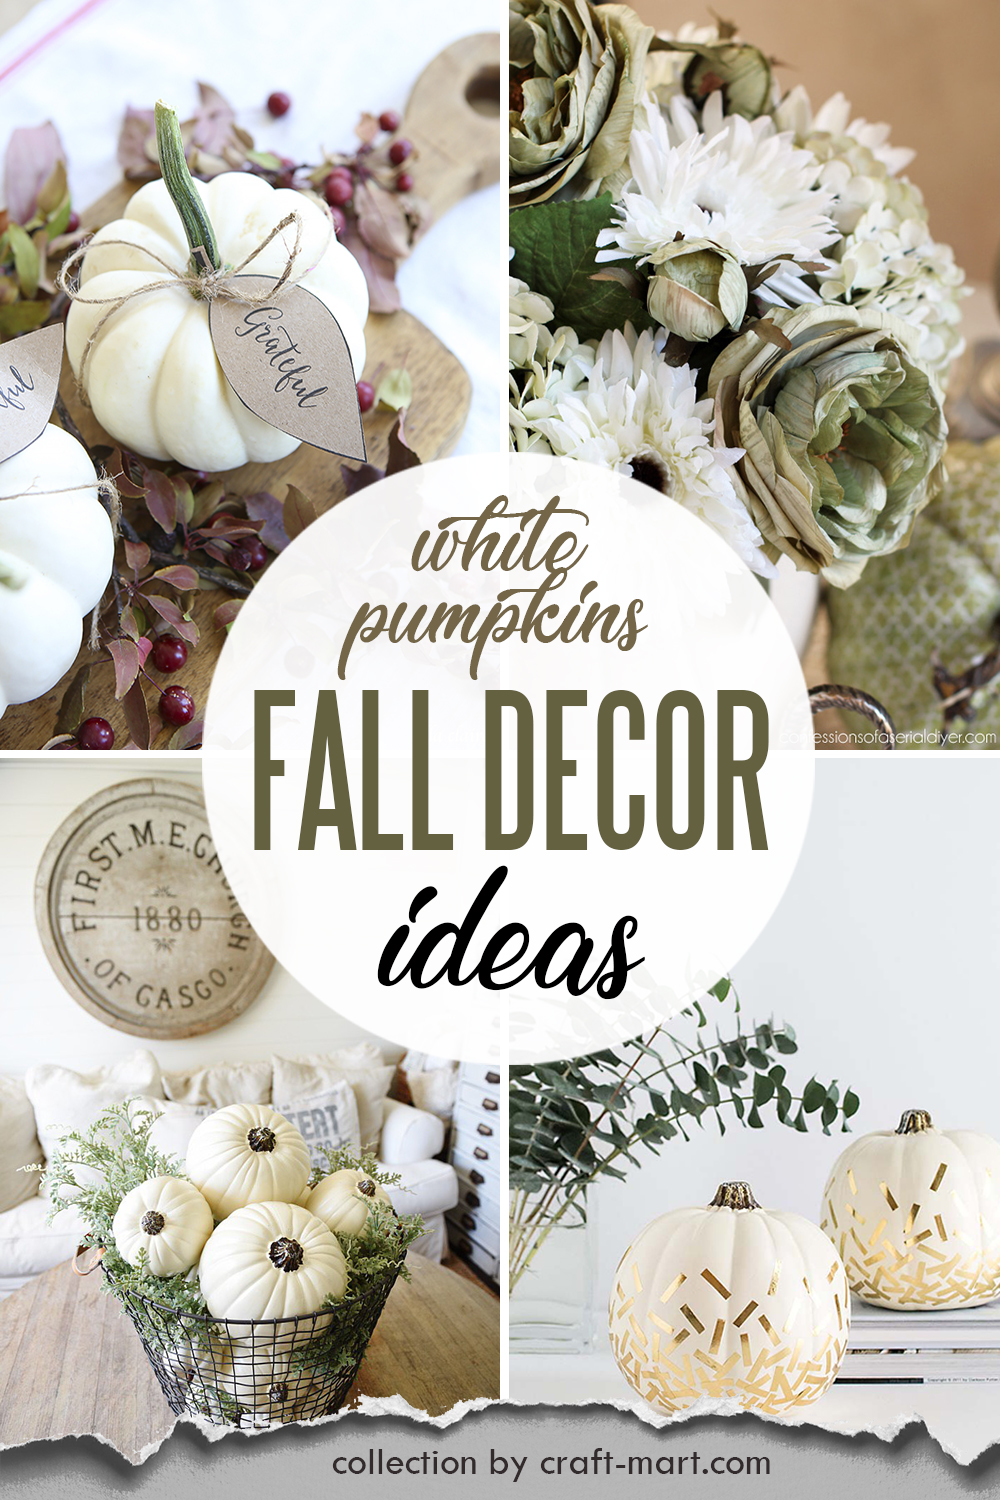 10 Quick and Easy White Pumpkin Fall Decor Ideas - Craft-Mart